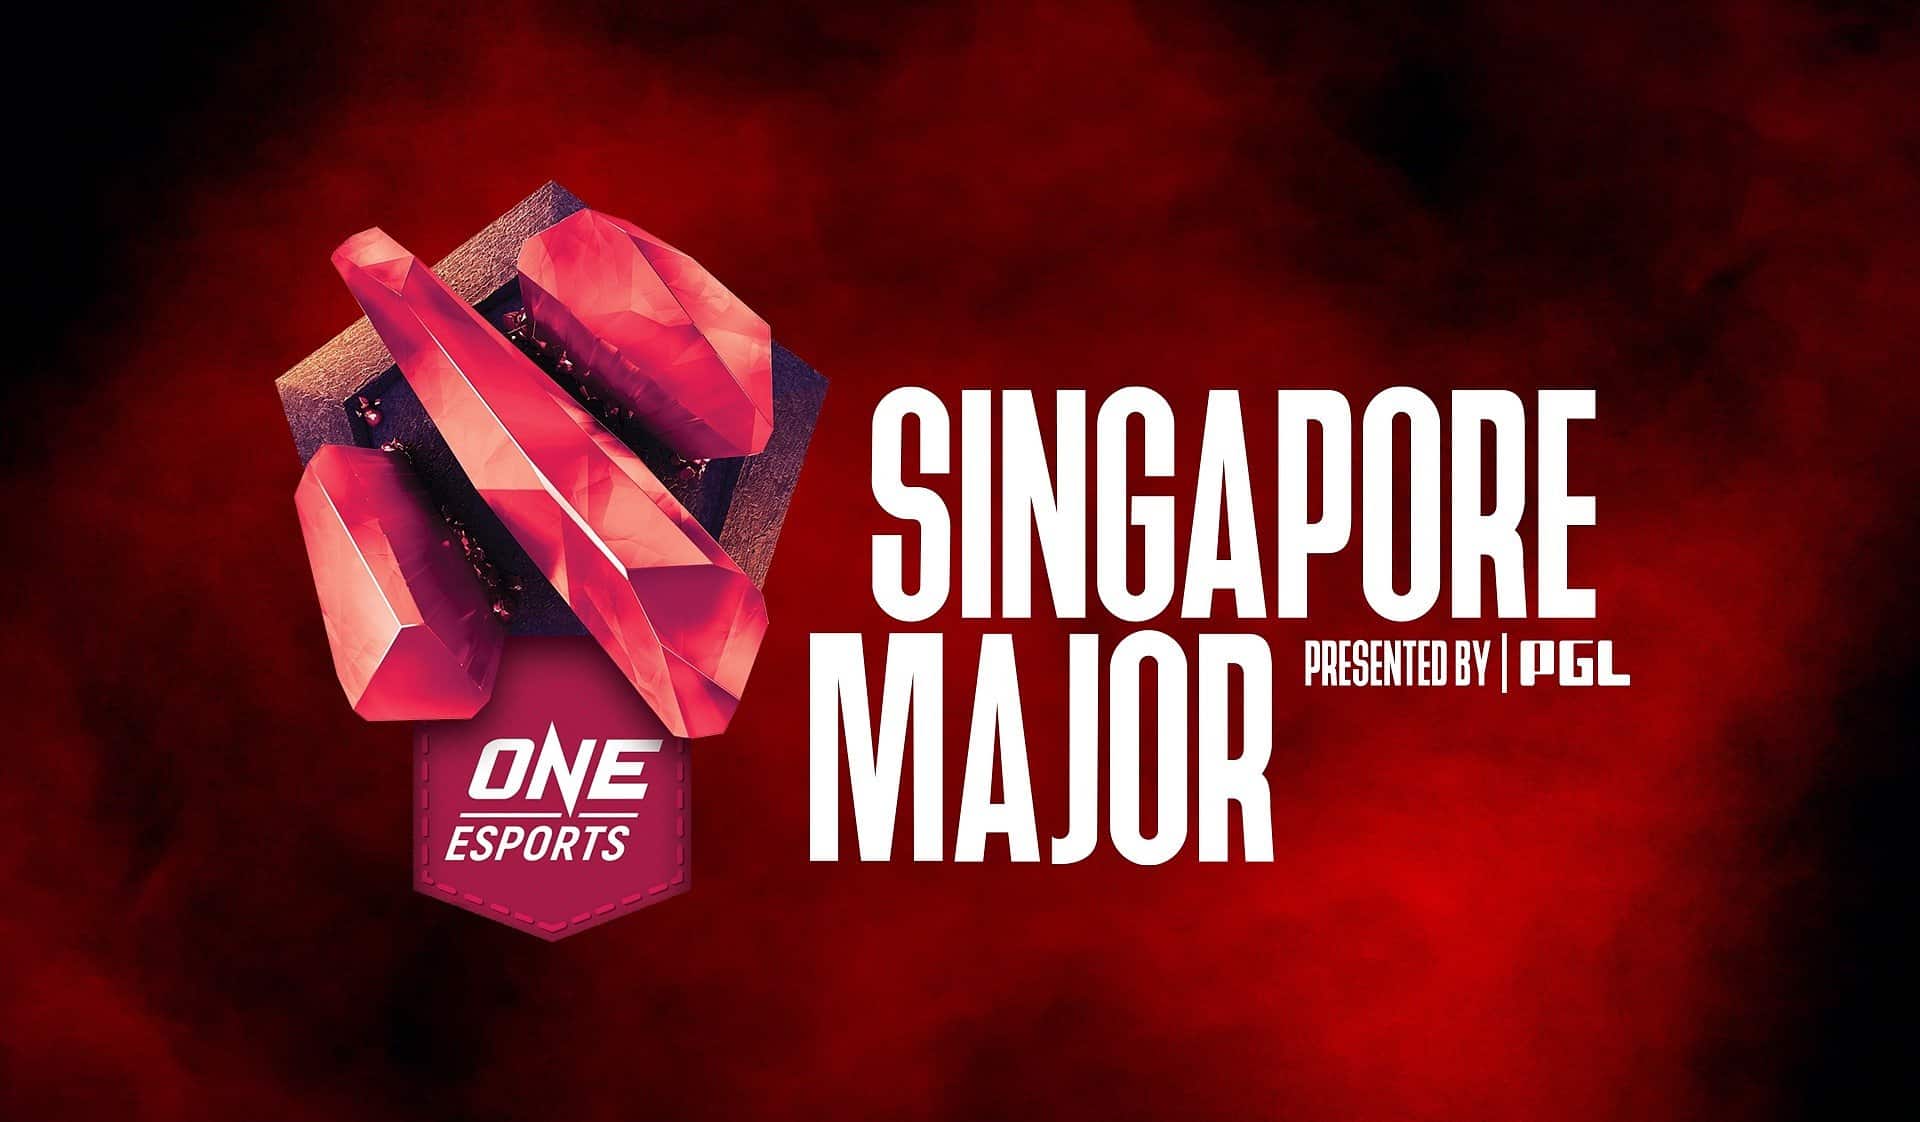 První LAN turnaj v Dotě 2 roku 2021: Začal OneEsports Major v Singapuru